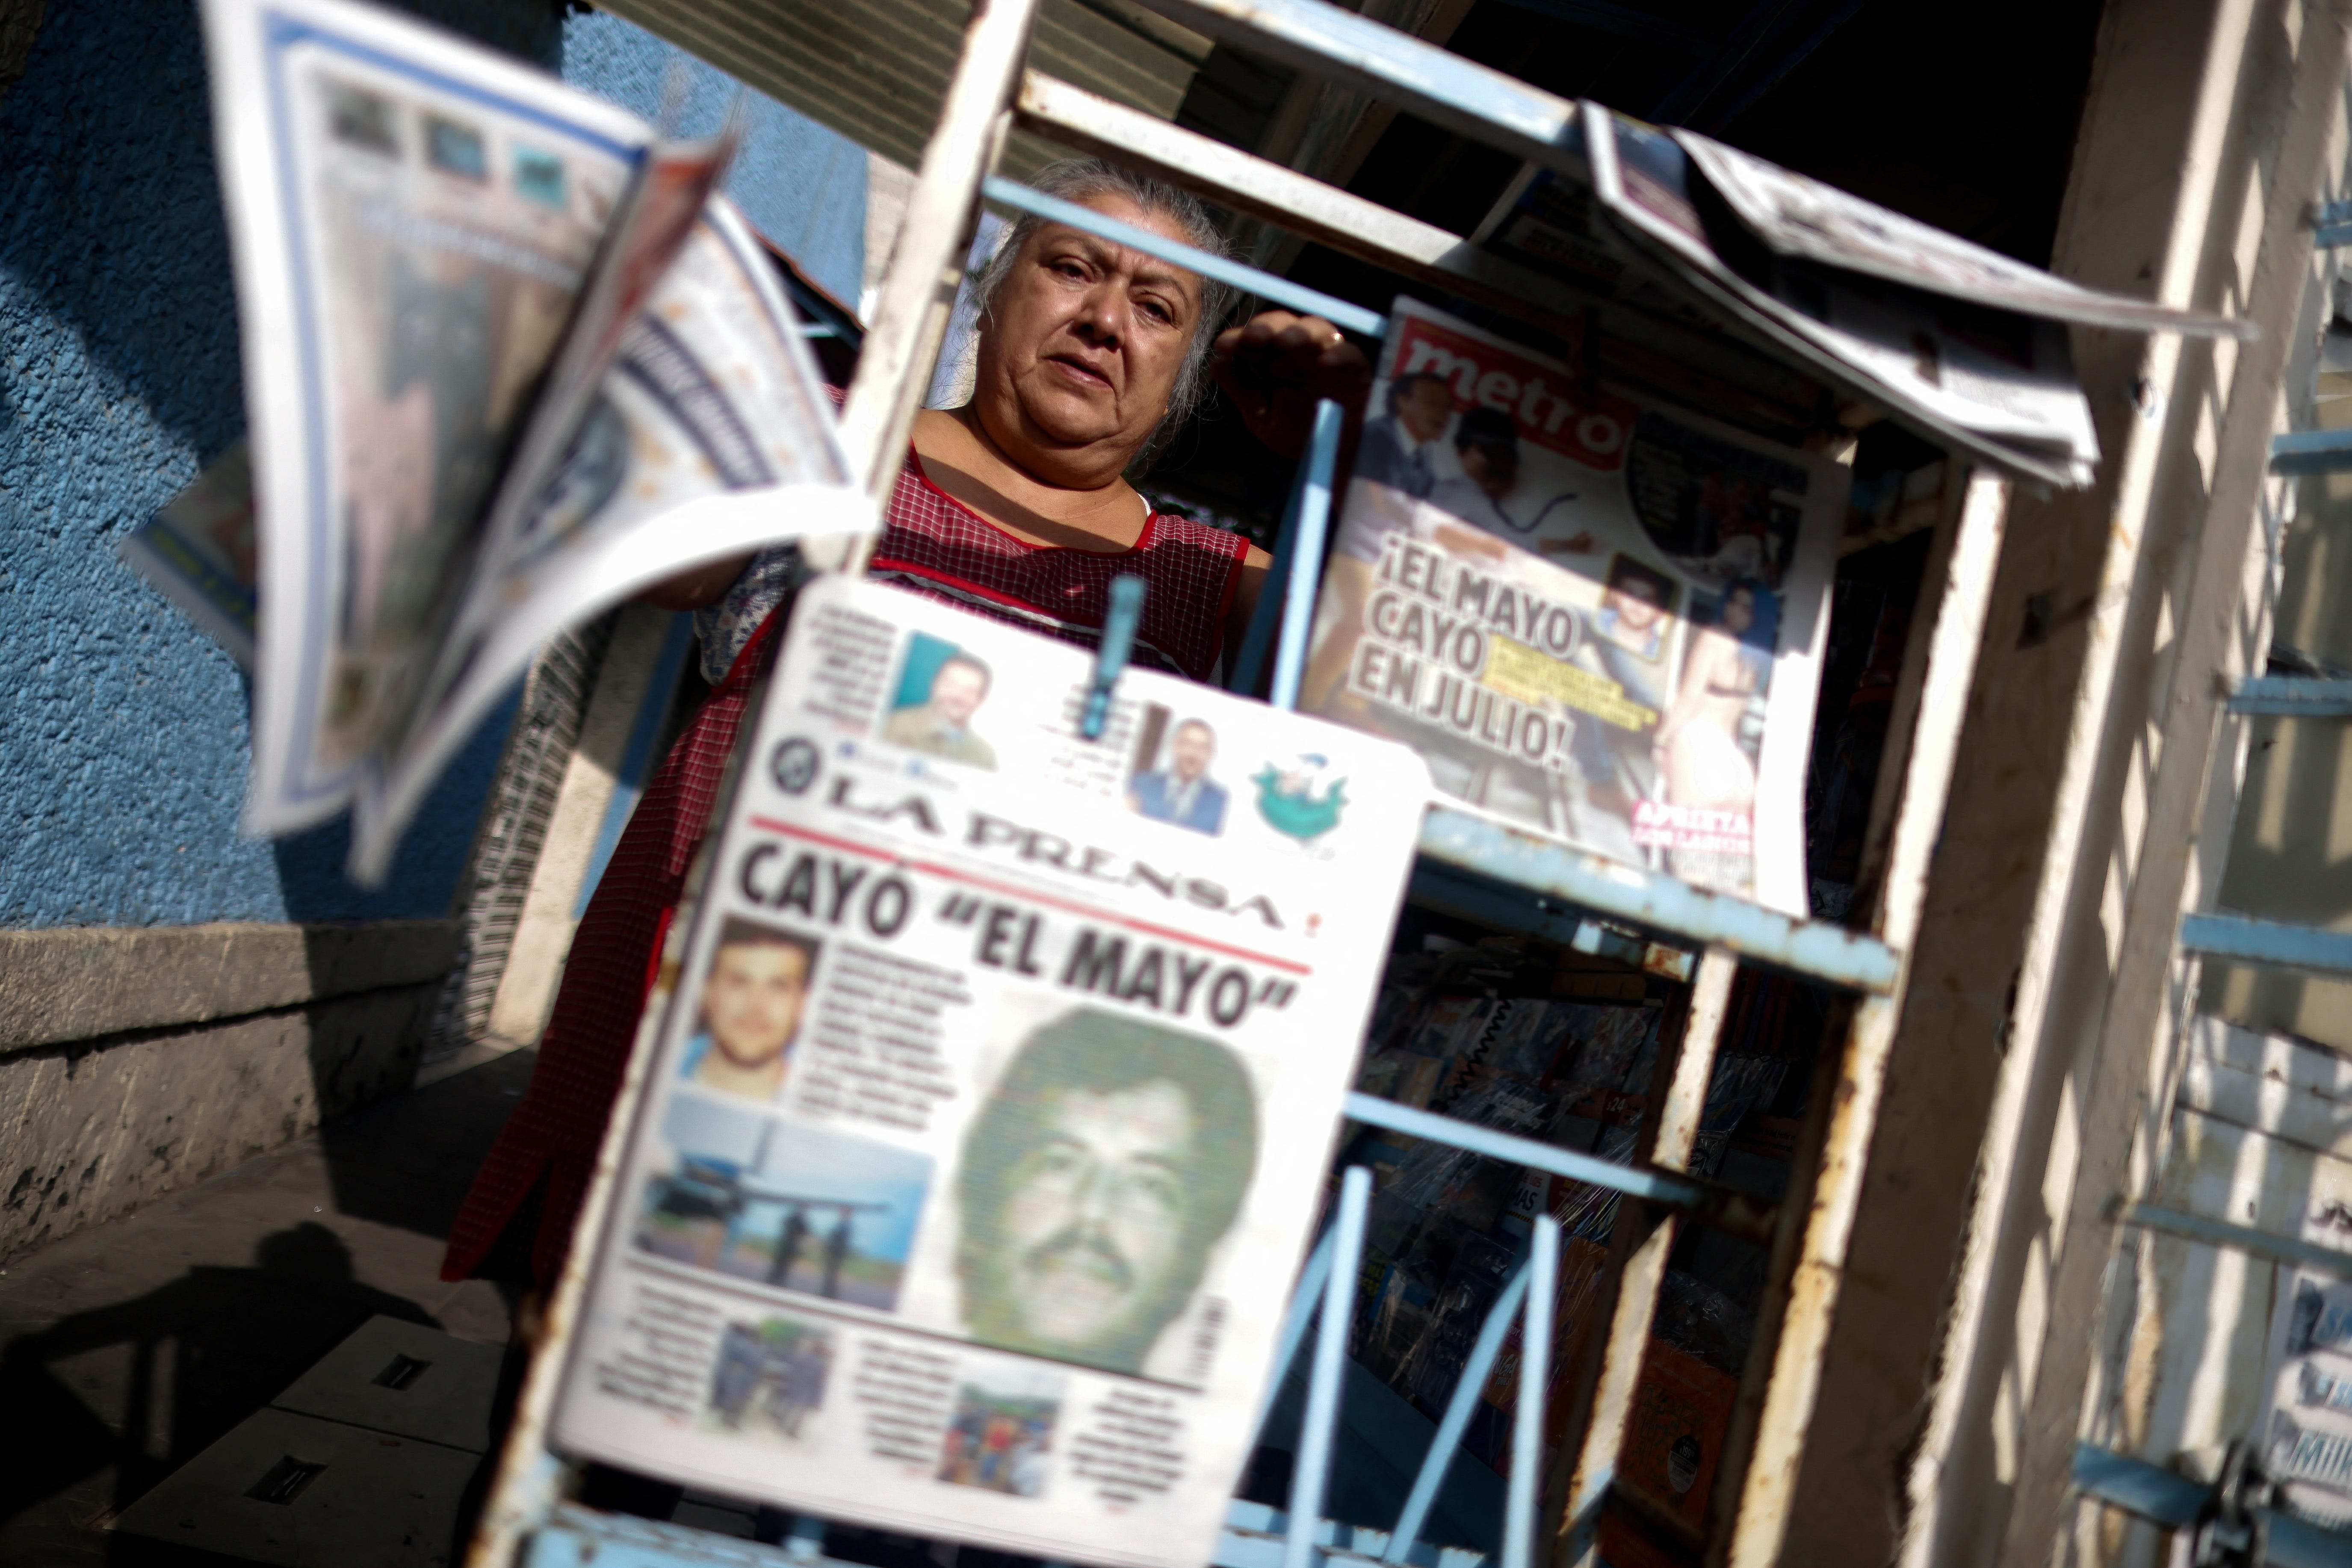 Sinaloa drug cartel leader 'El Mayo' Zambada hearing in El Paso set for Aug. 1